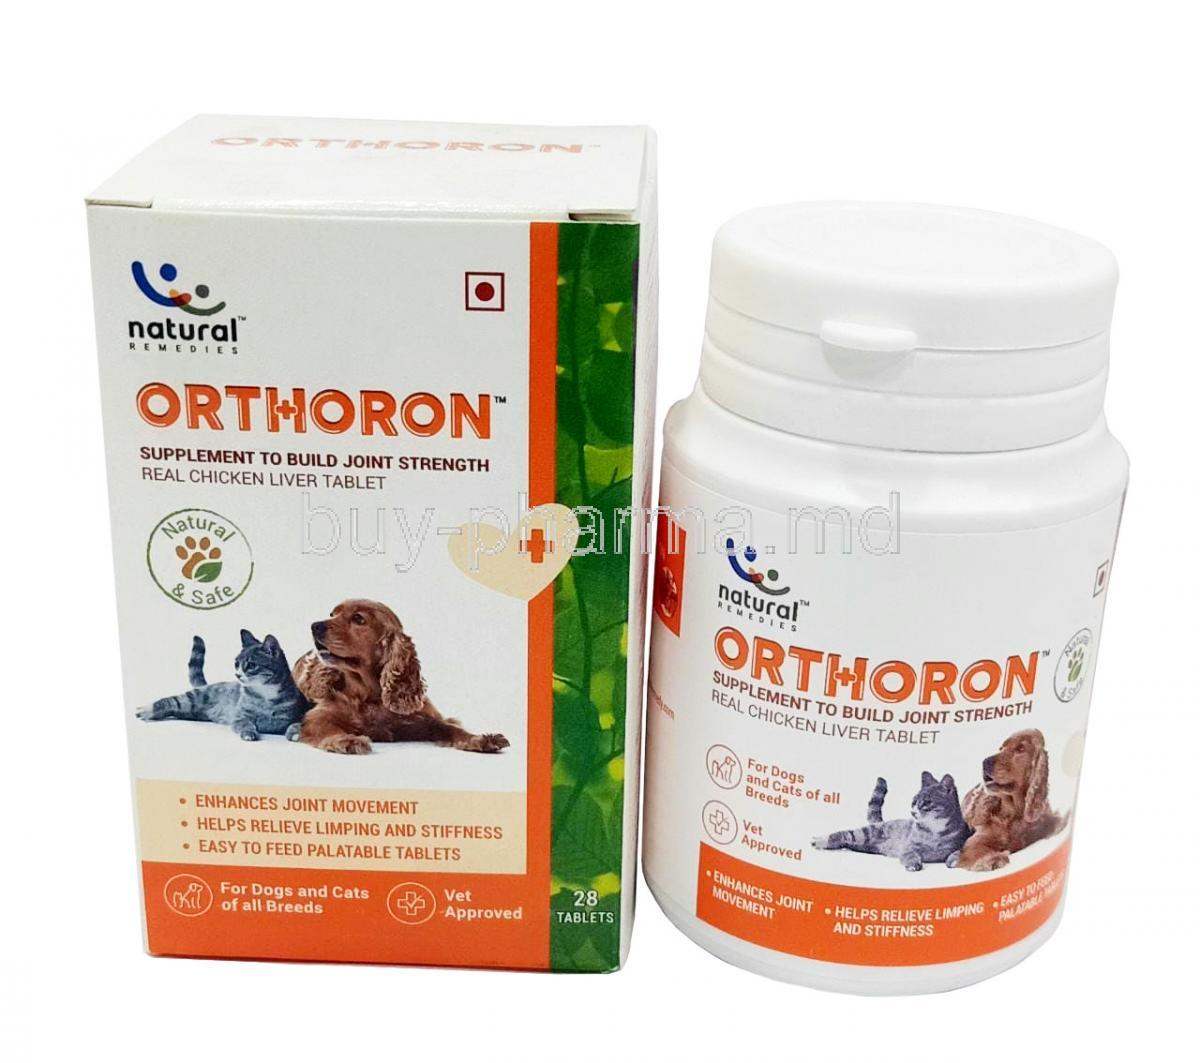 Orthoron, Turmacin, Natural palatant additive, 28 Tablet, Natural Remedies, Box, Bottle